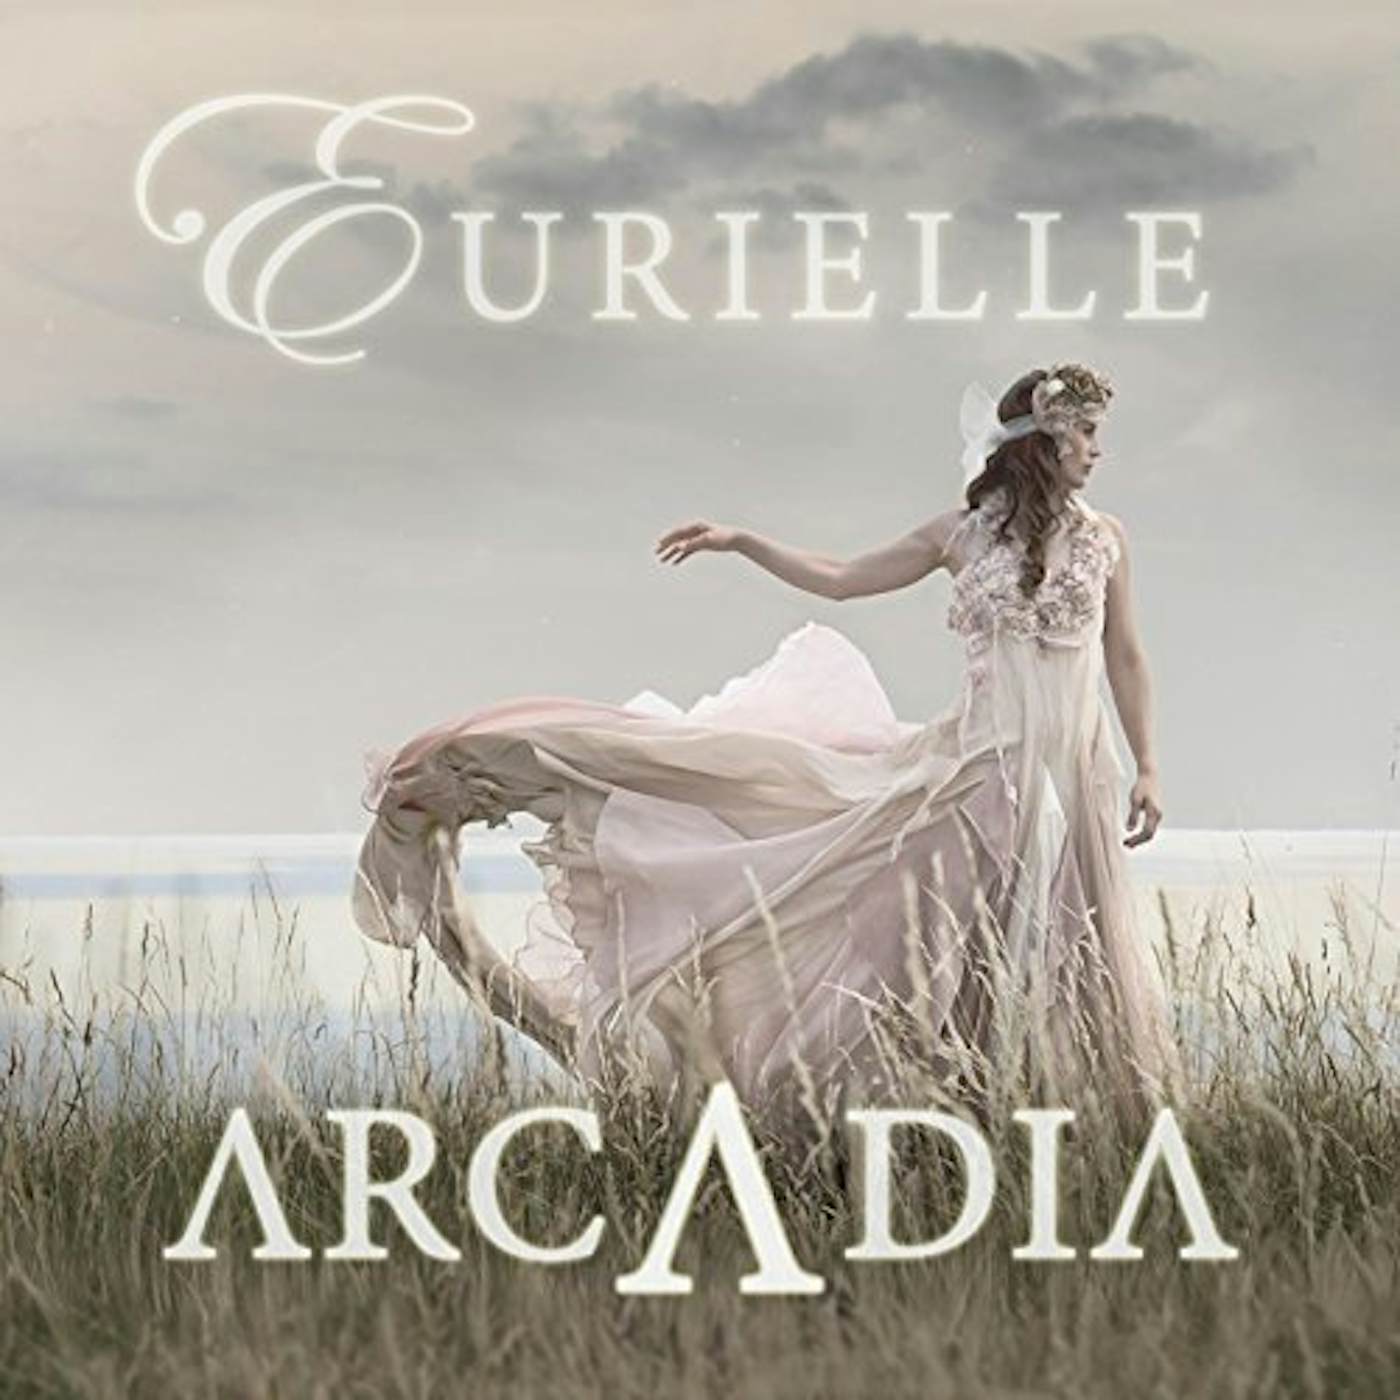 Eurielle ARCADIA CD